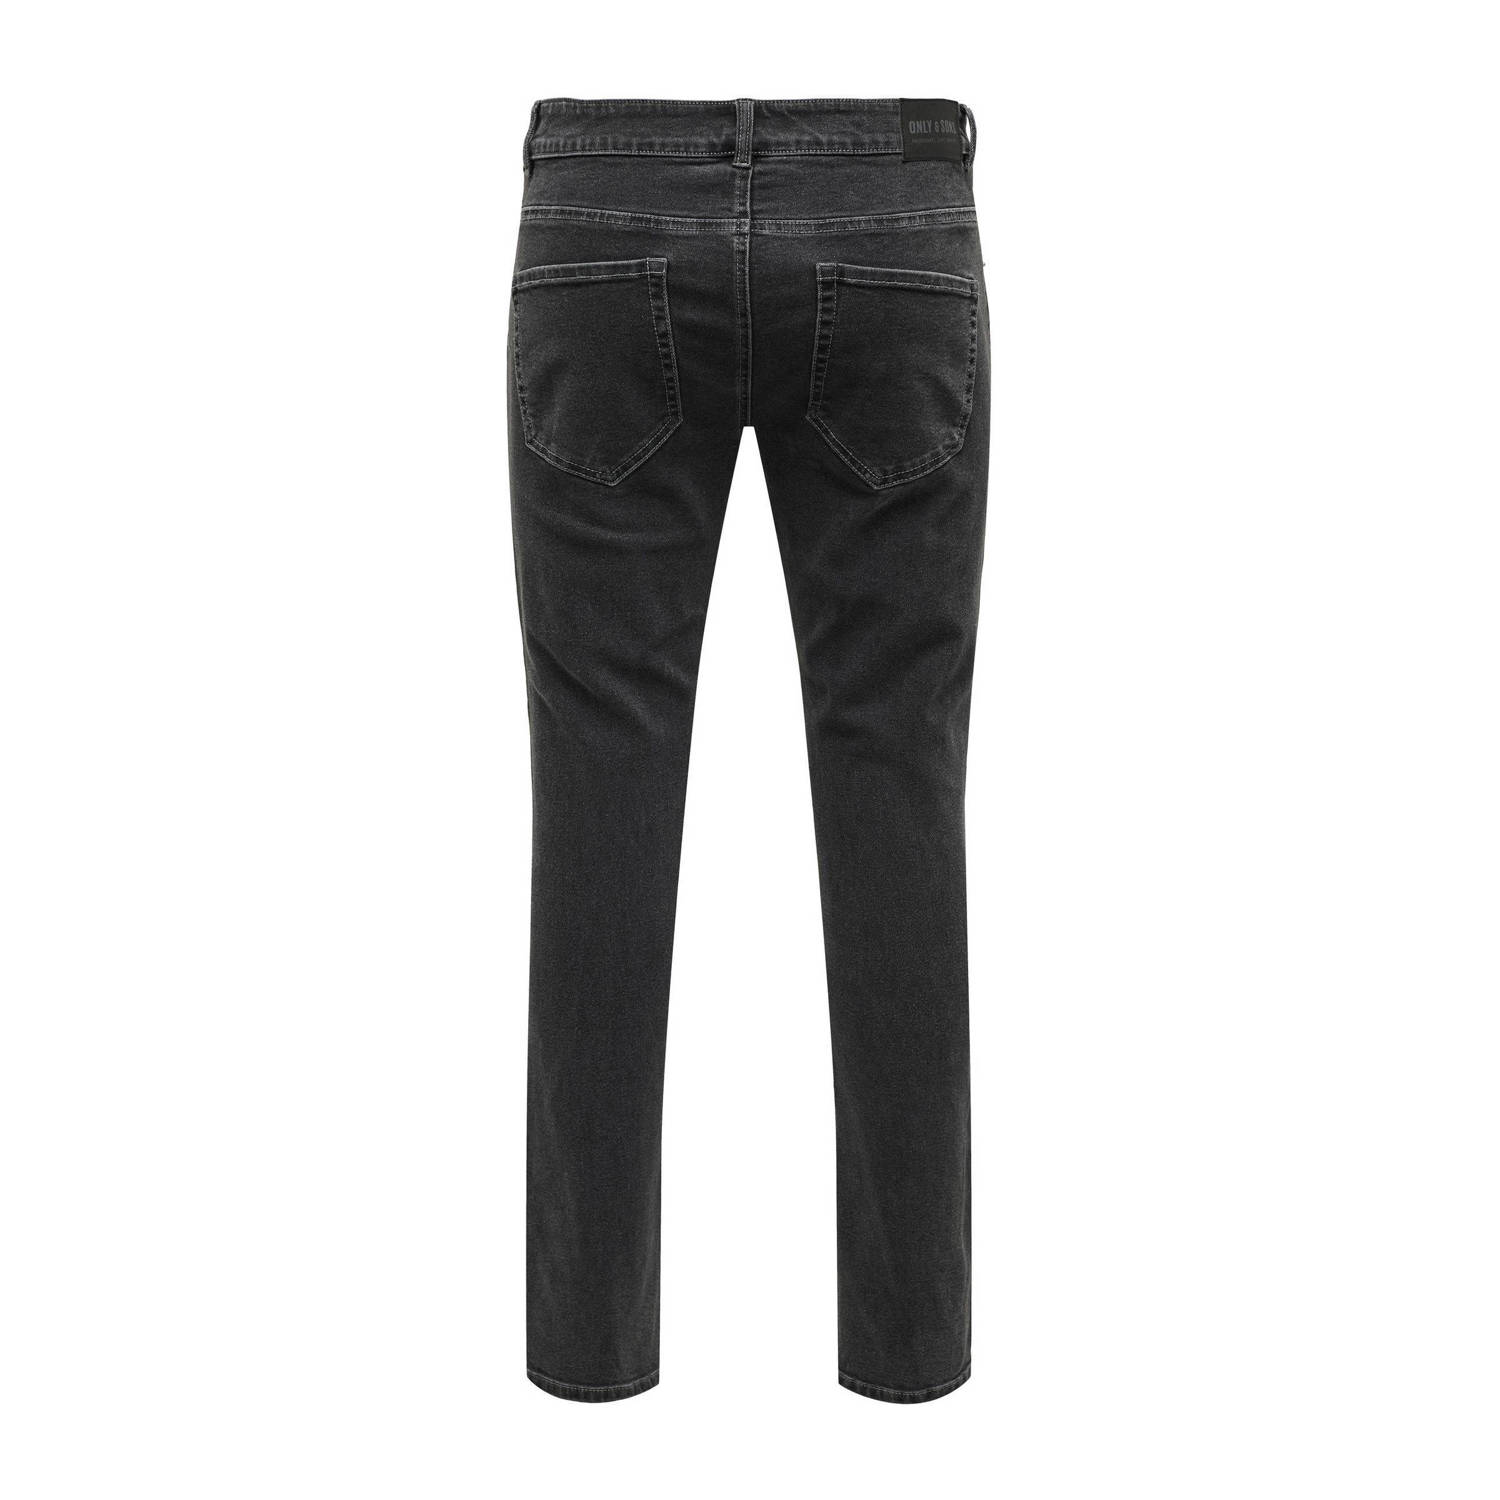 ONLY & SONS skinny jeans ONSWARP 7987 medium grey denim